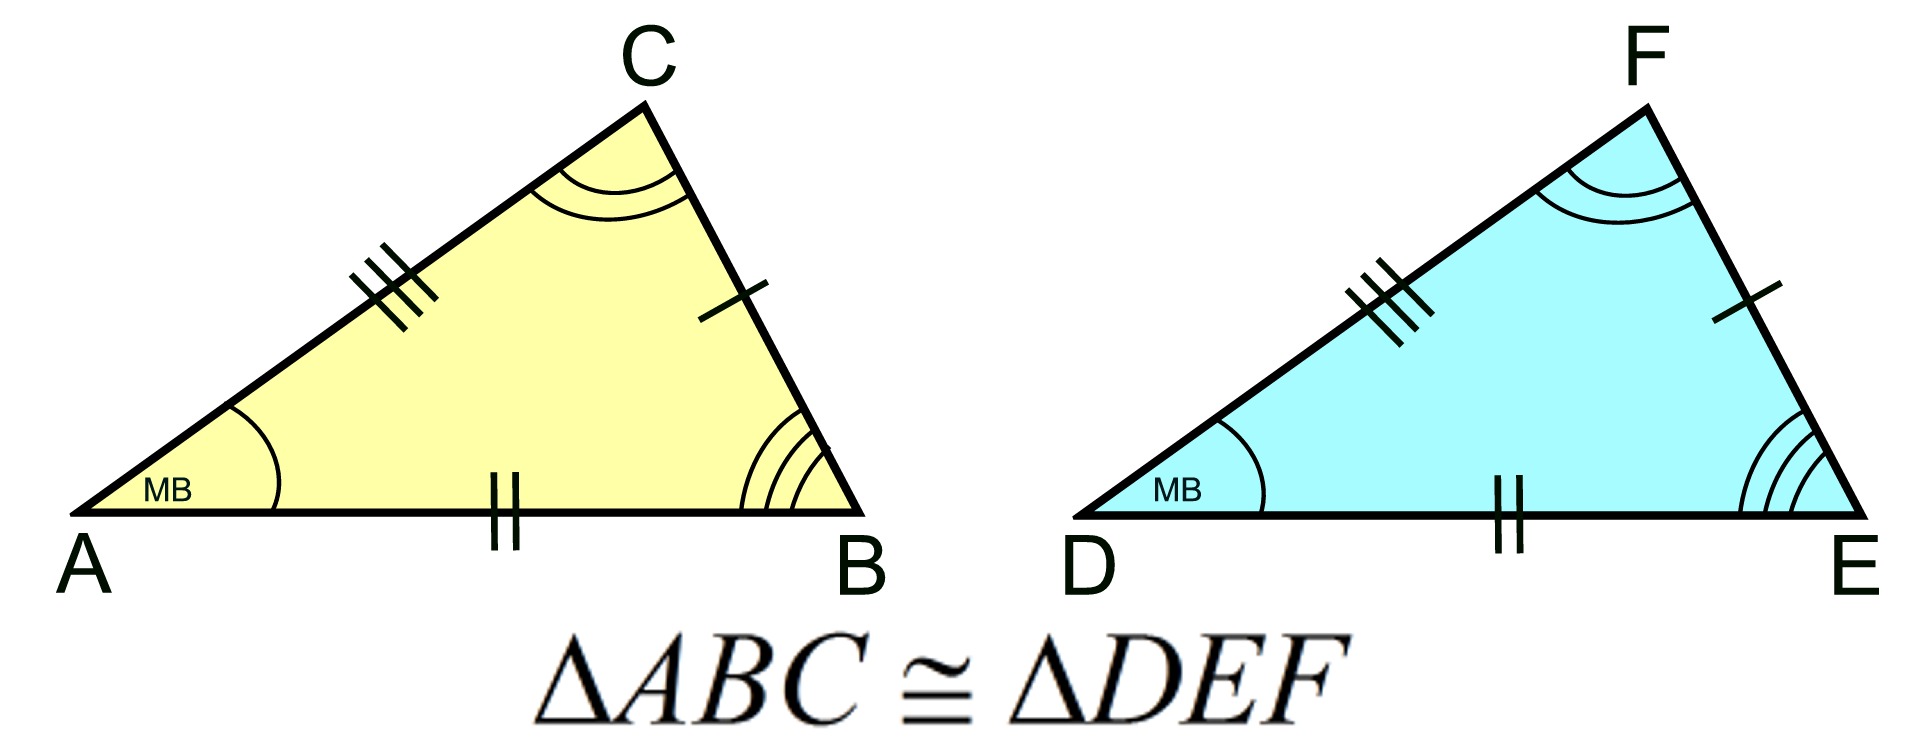 triangles1